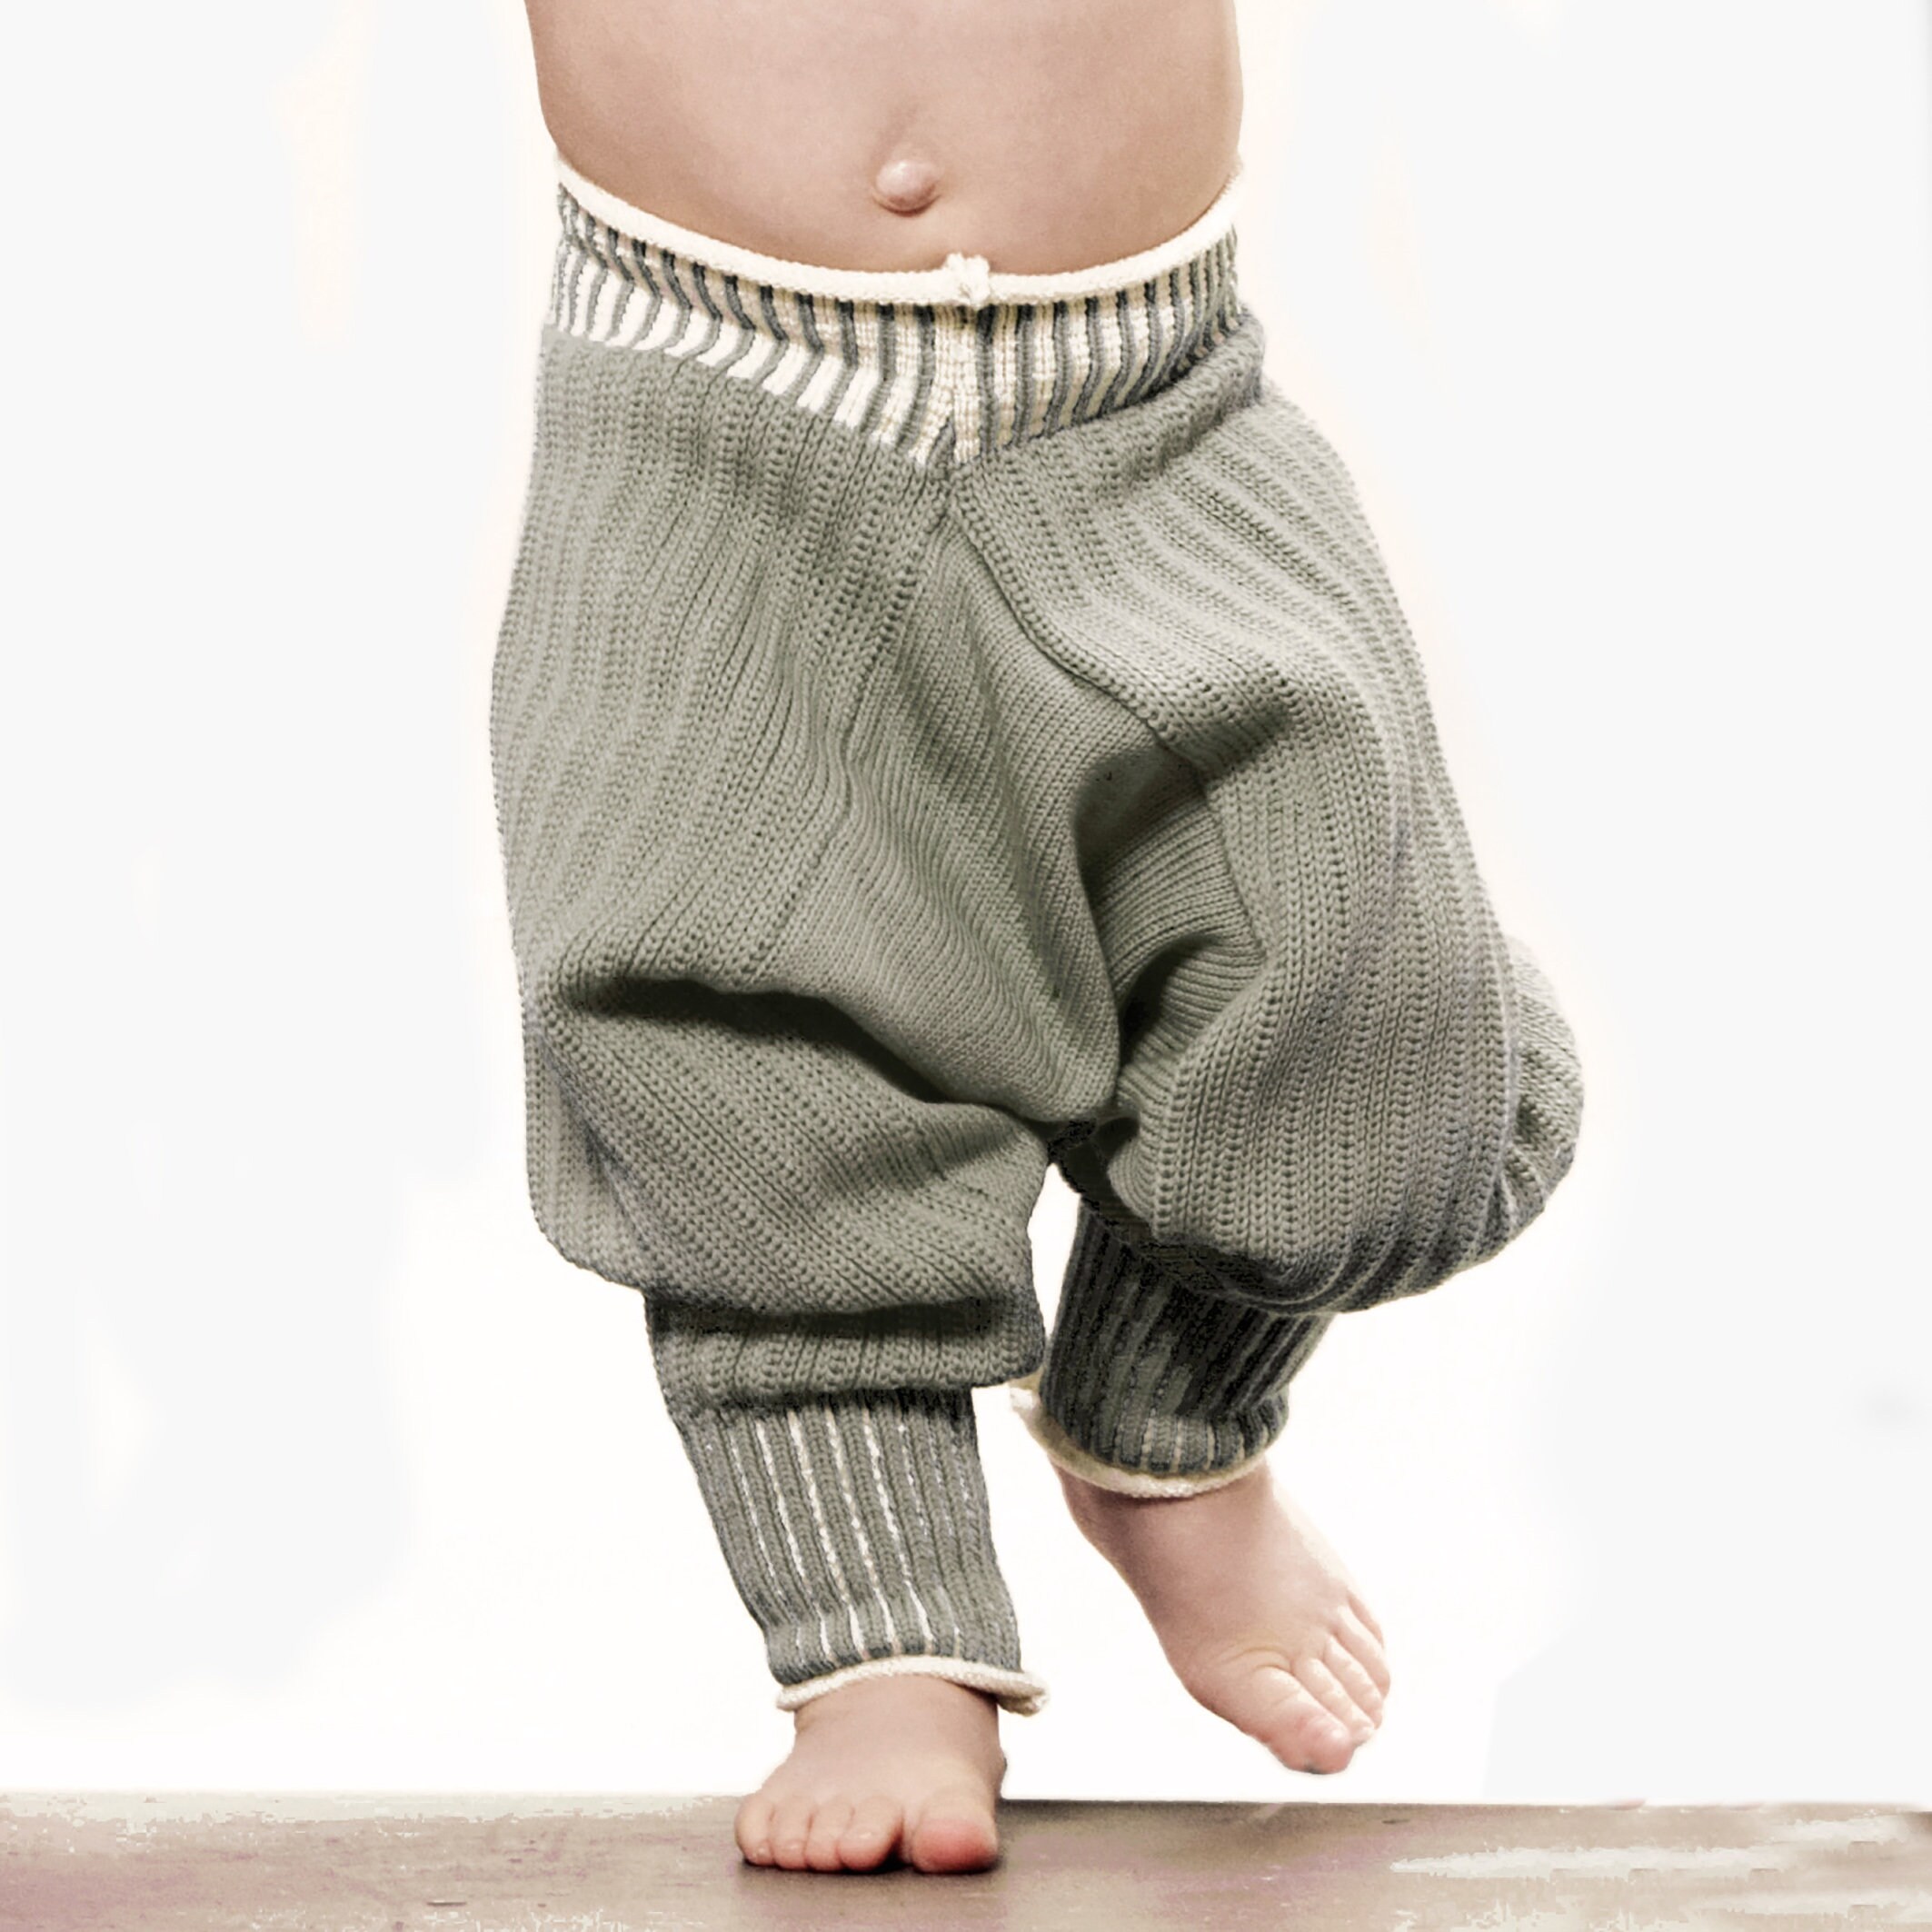 Kleding Unisex kinderkleding Unisex babykleding Broek gebreid van fijne wol merino Sarouel broek 